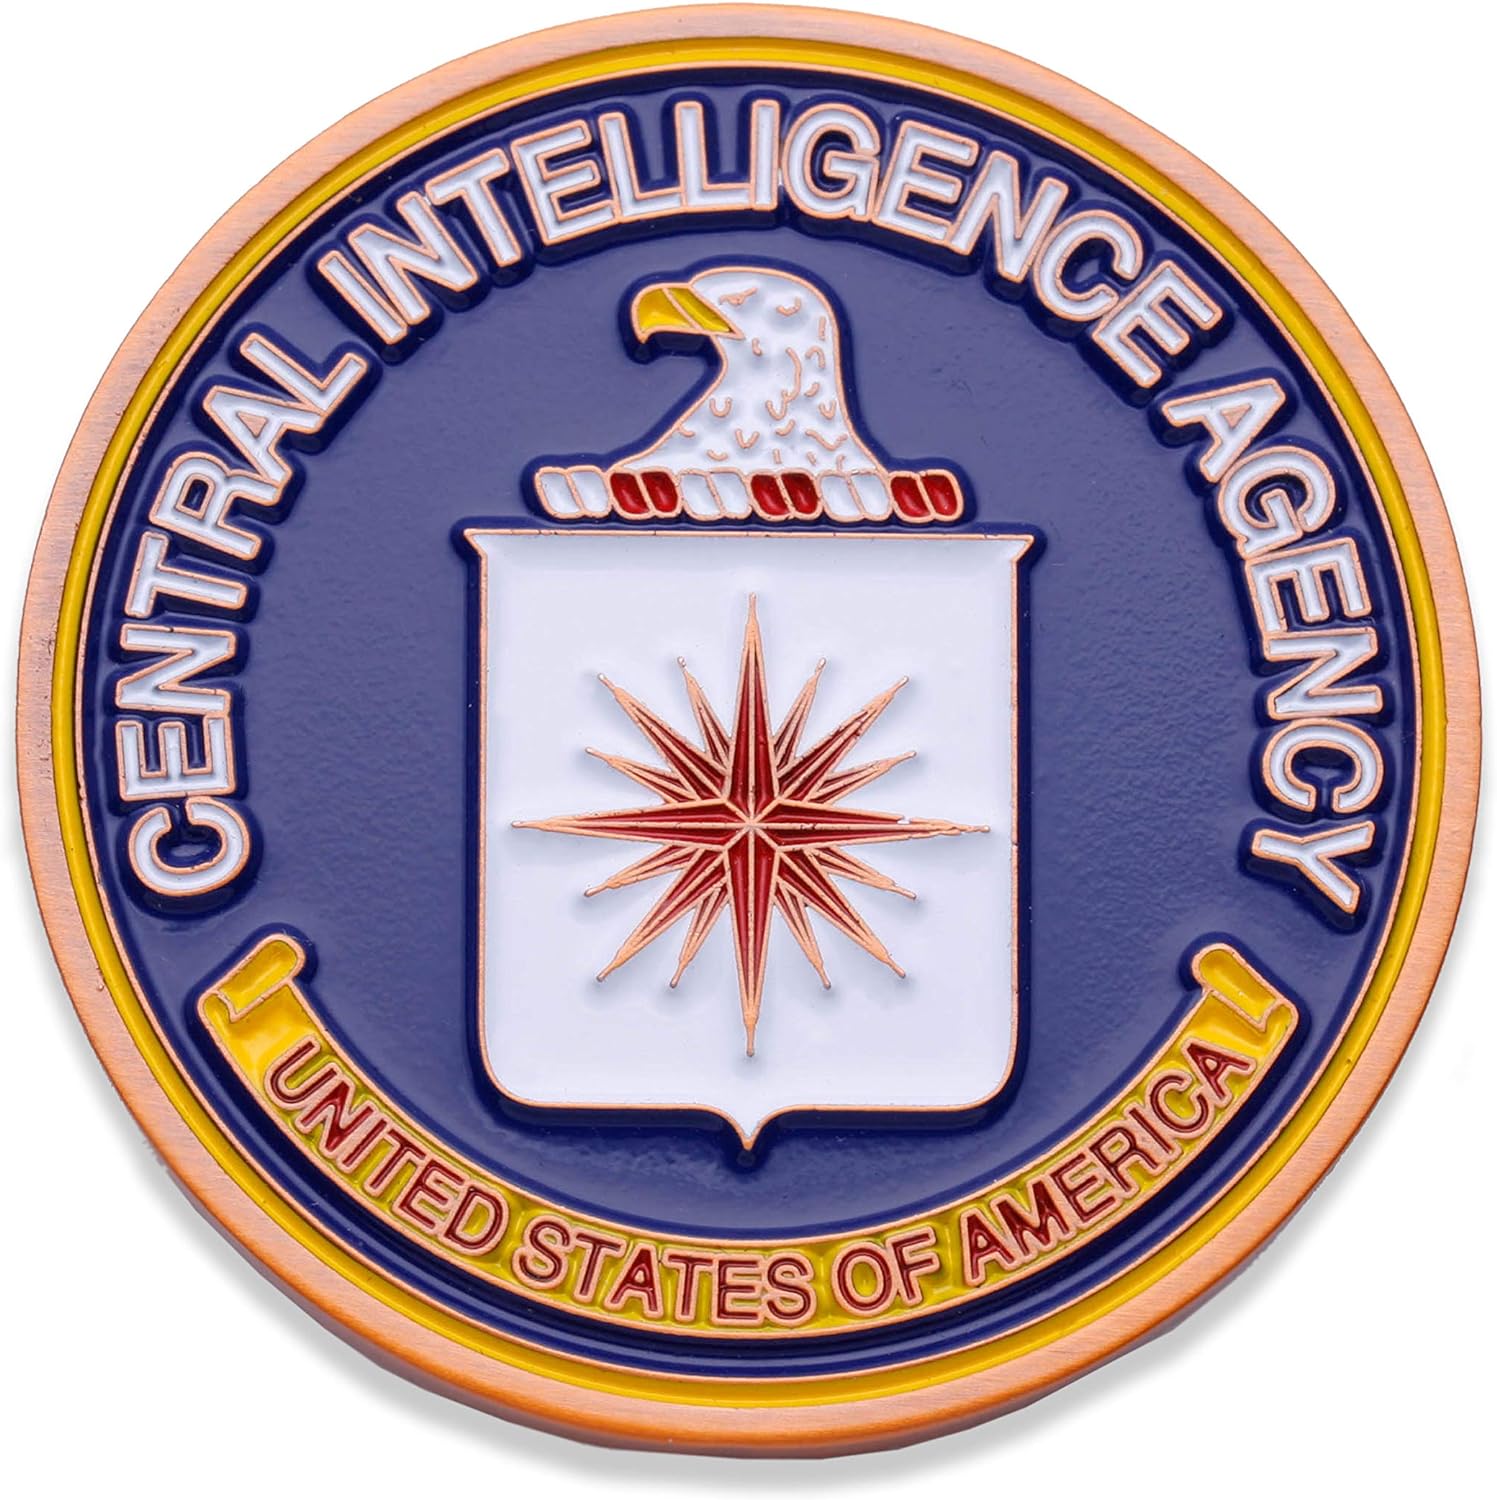 Custom USA Gobierno Gobierno Gobierno Agencia Central de Inteligencia Desafío Moned Metal CIA FBI DEA DESABLE